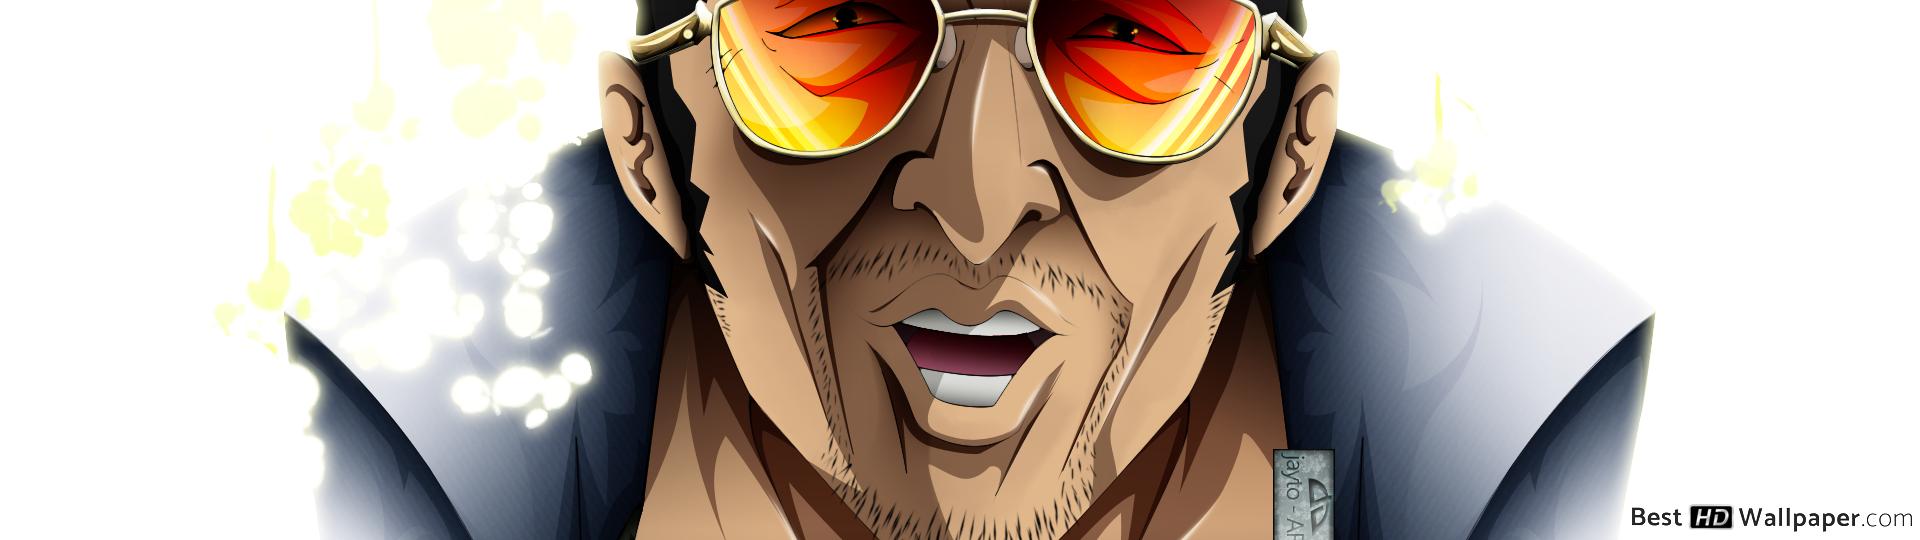 One Piece Kizaru Borsalino HD wallpaper download